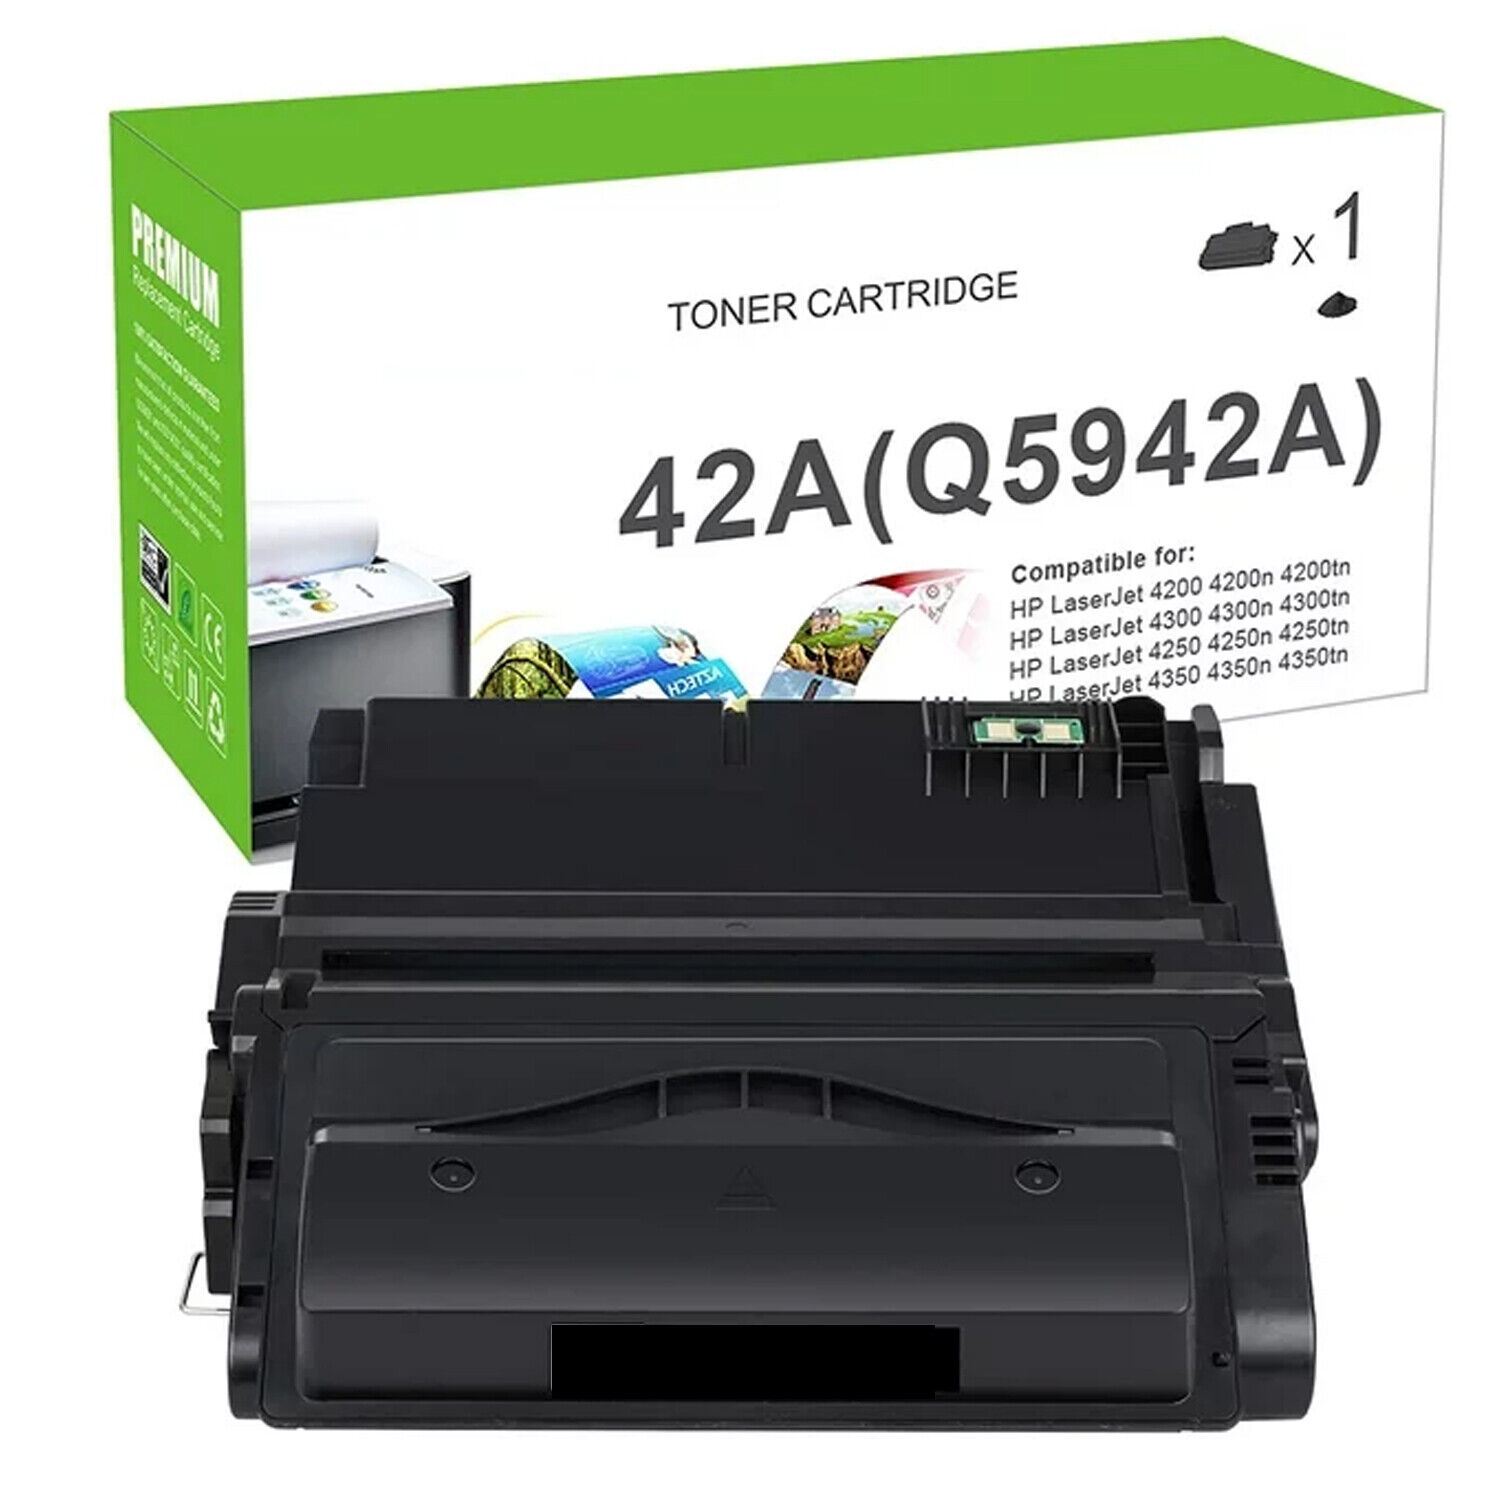 Toner Cartridge for HP 42A Q5942A Laserjet 4250 4200 4240N 4250N Printer Ink